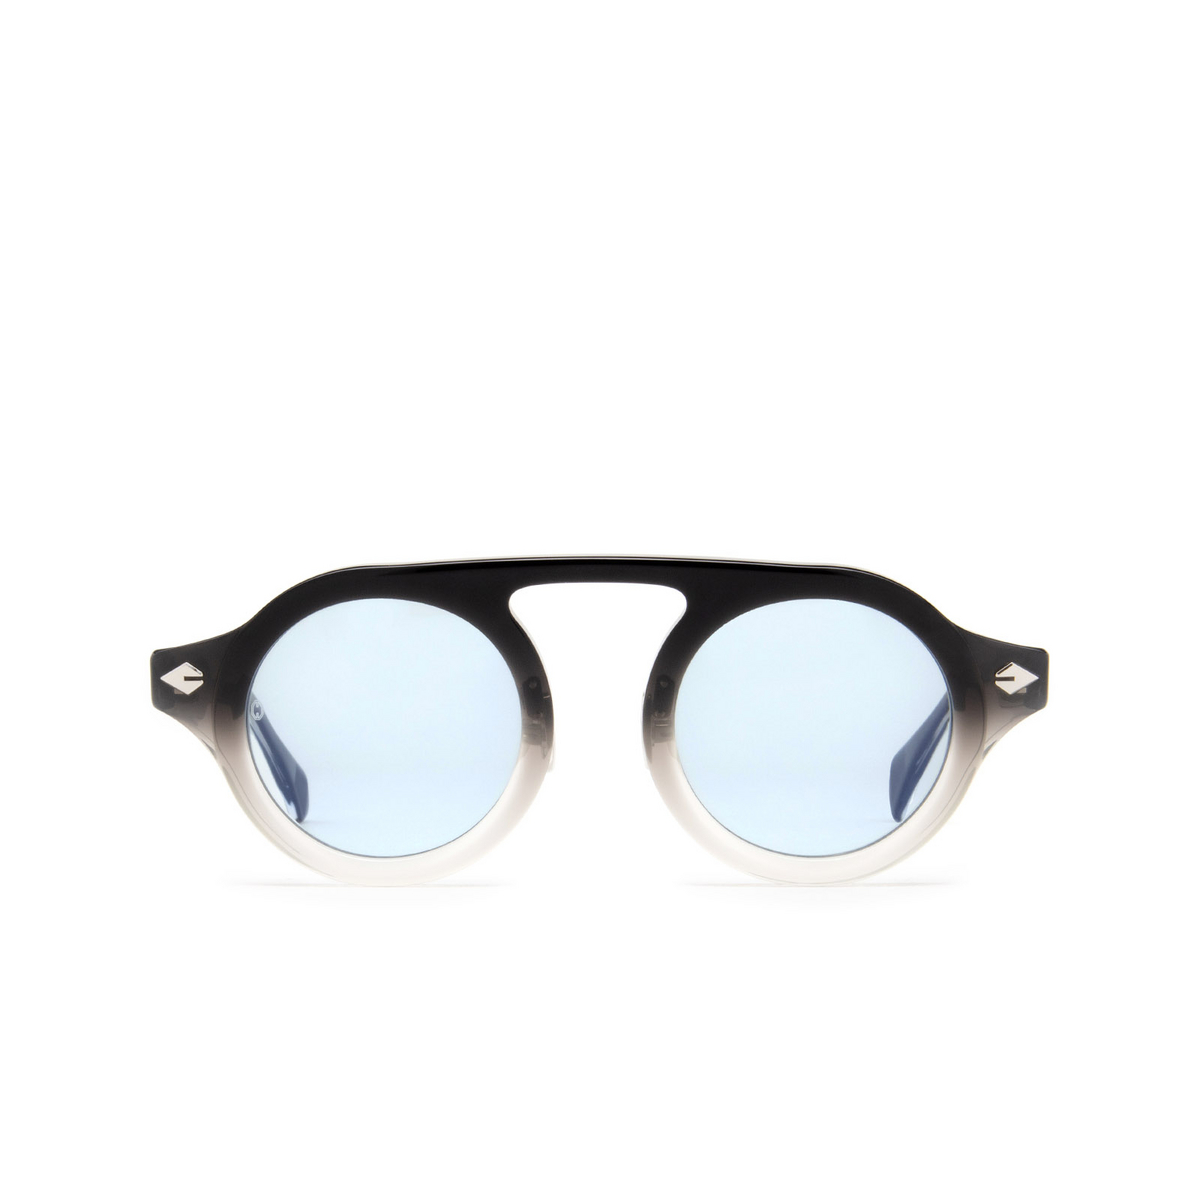 T Henri E2 Sunglasses VAPOR - front view